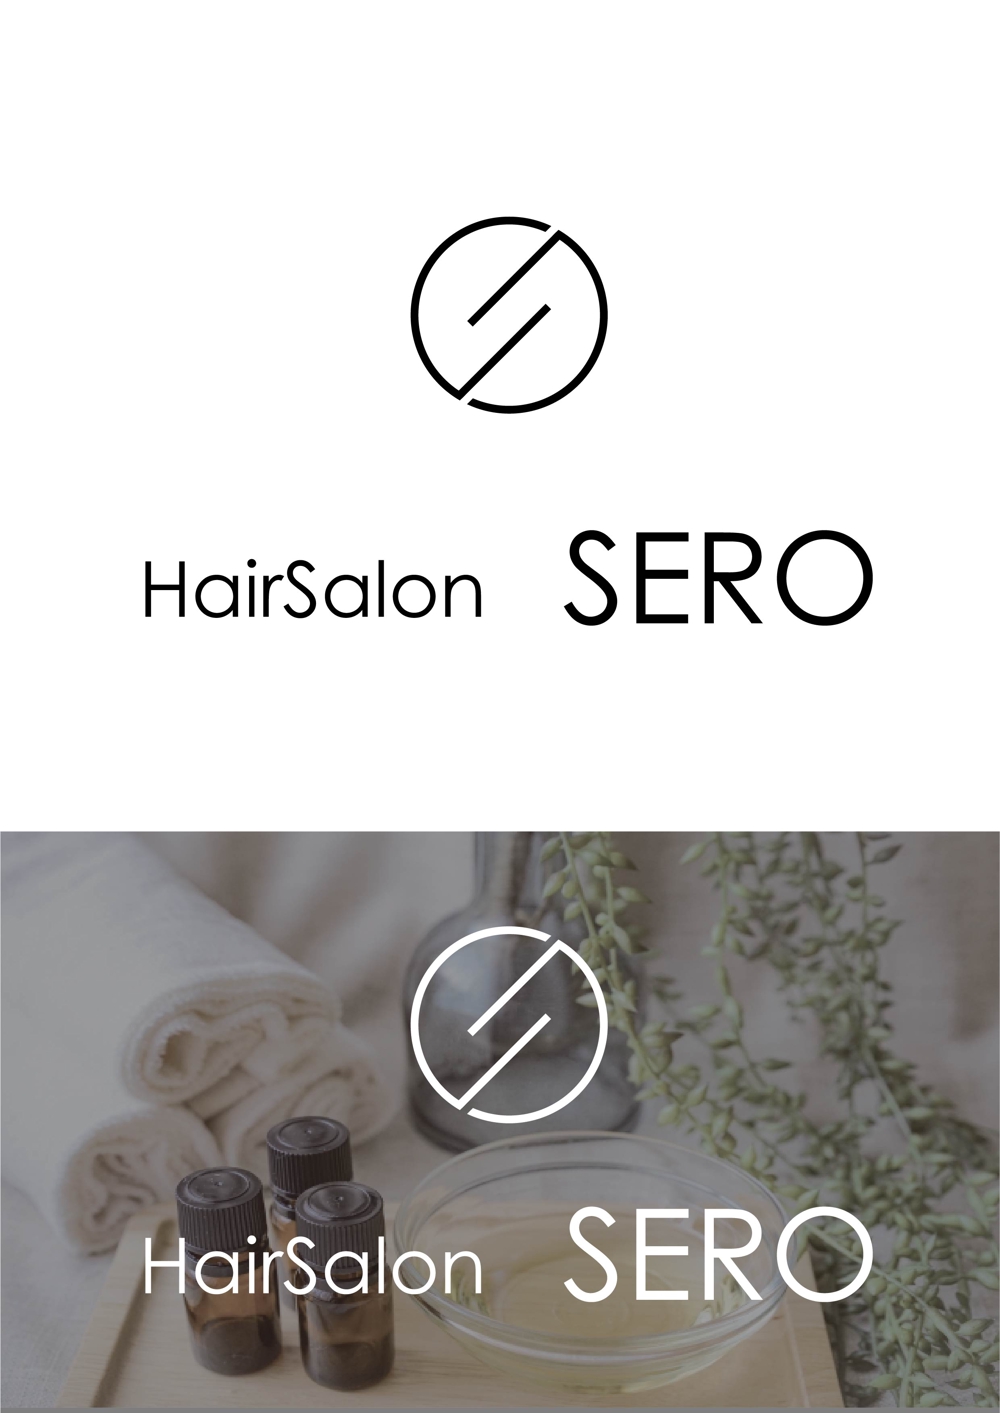 HairSalon SERO_アートボード 1.jpg